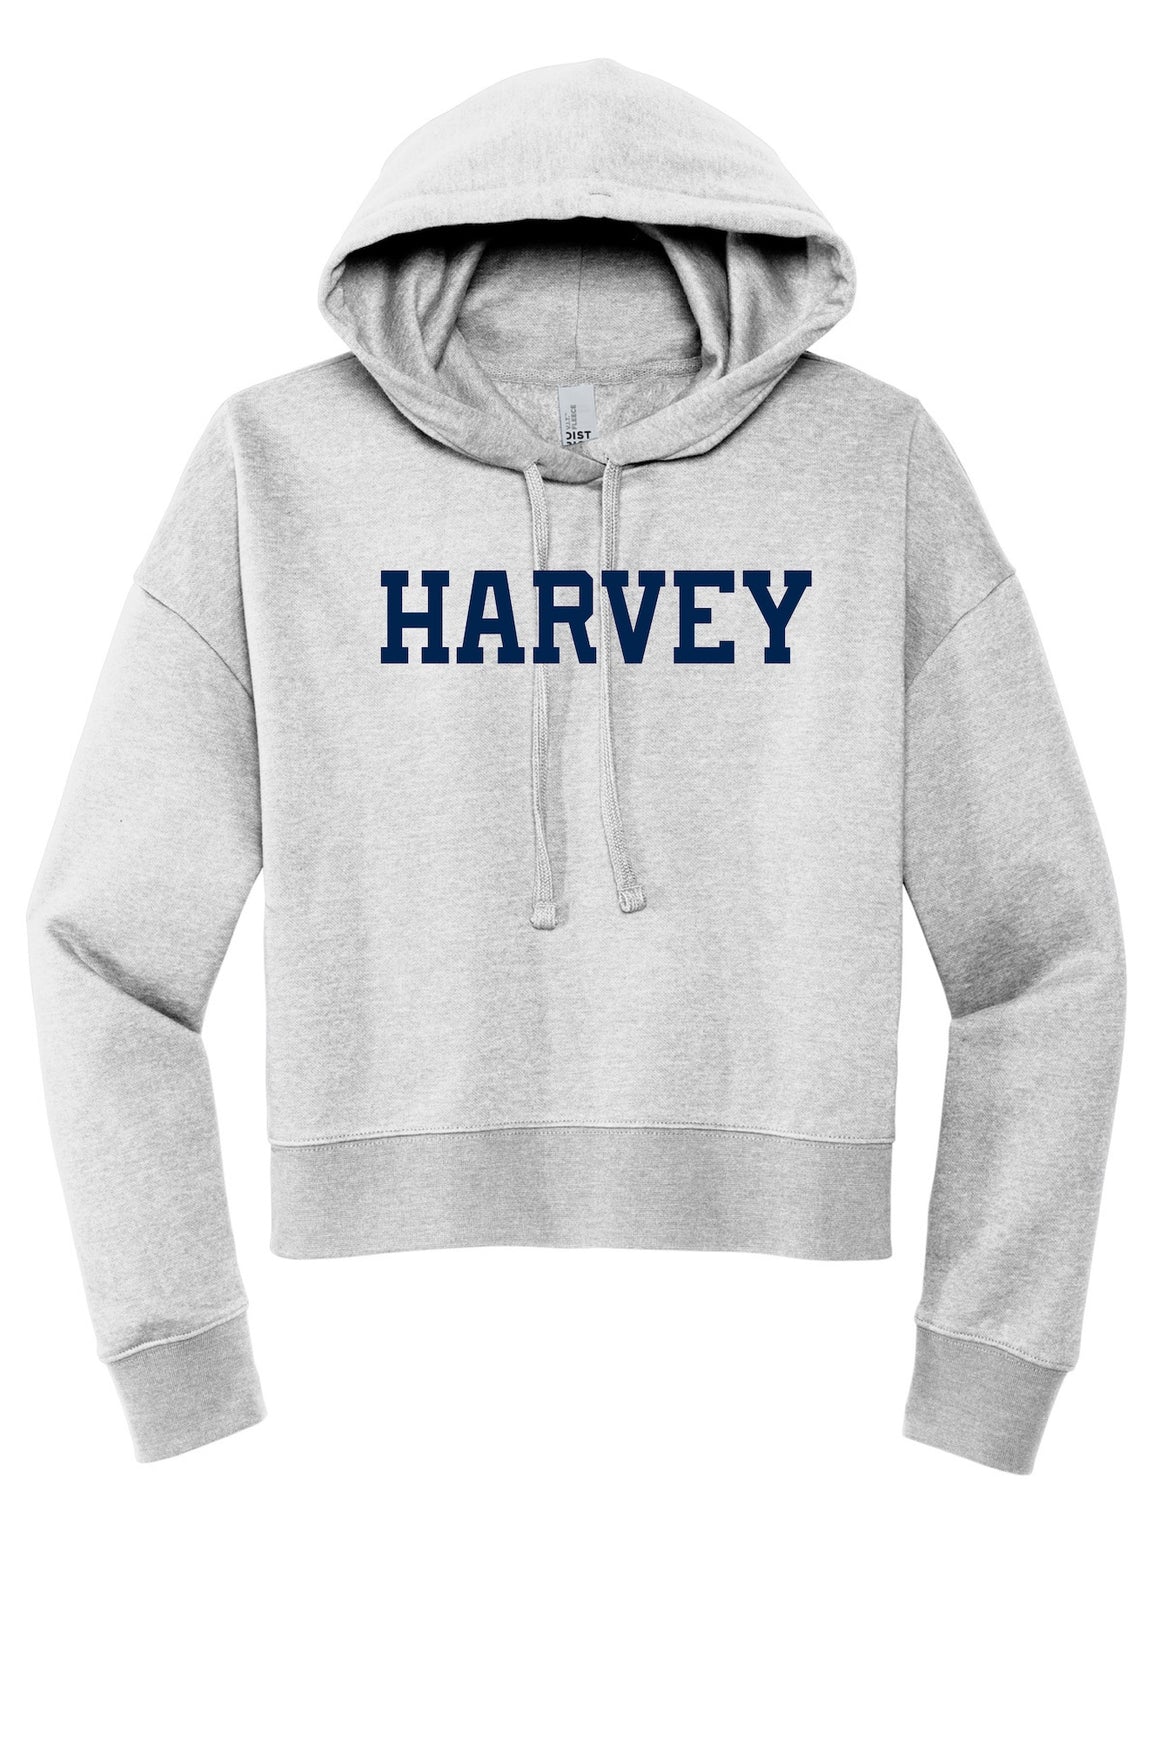 Harvey School Women's Cropped Pullover Hoodie